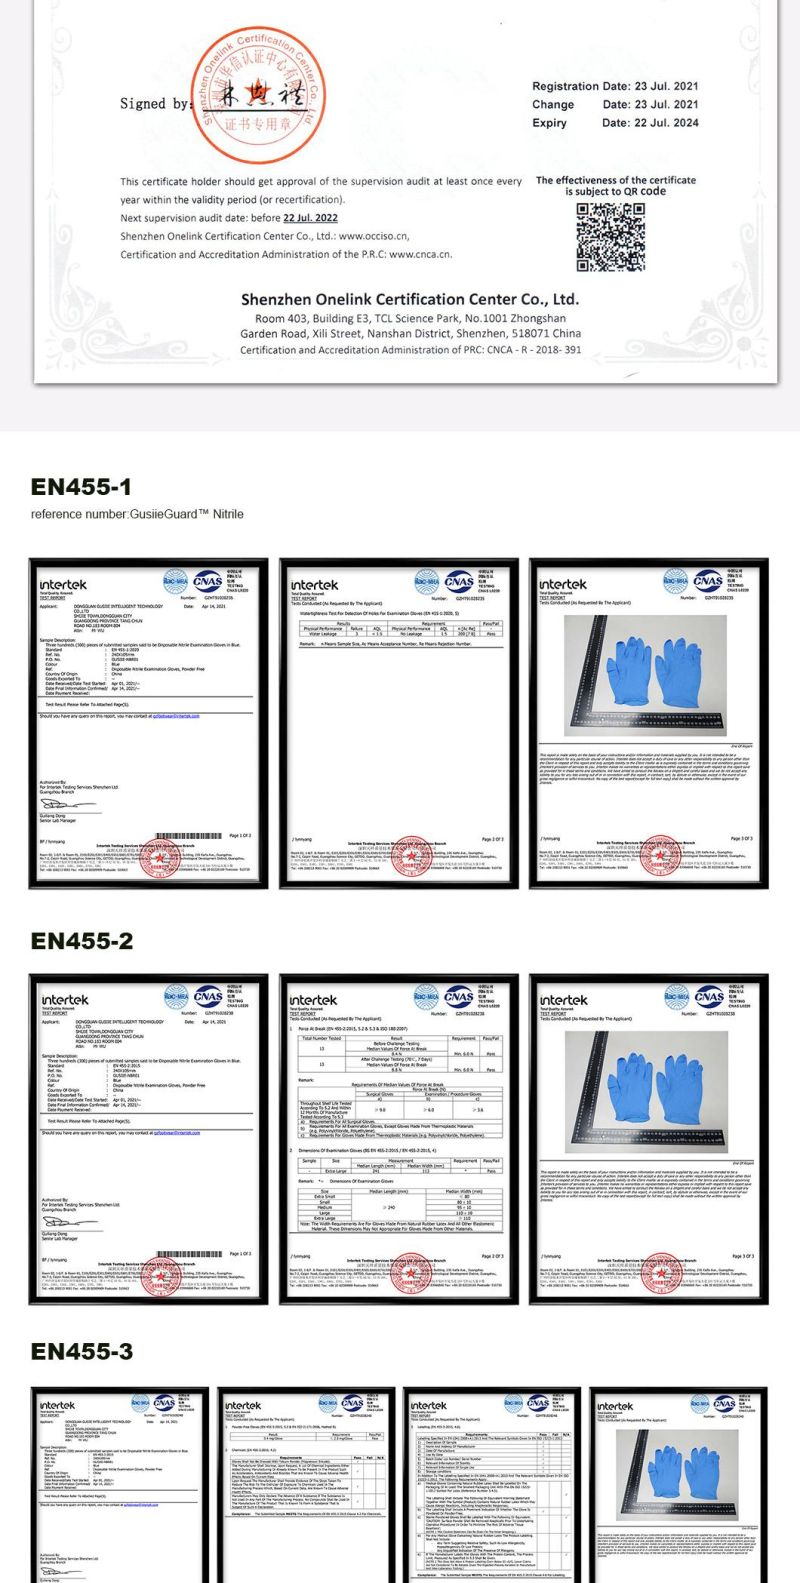 Gusiie Blue Nitrile Medical Examination Large Gloves